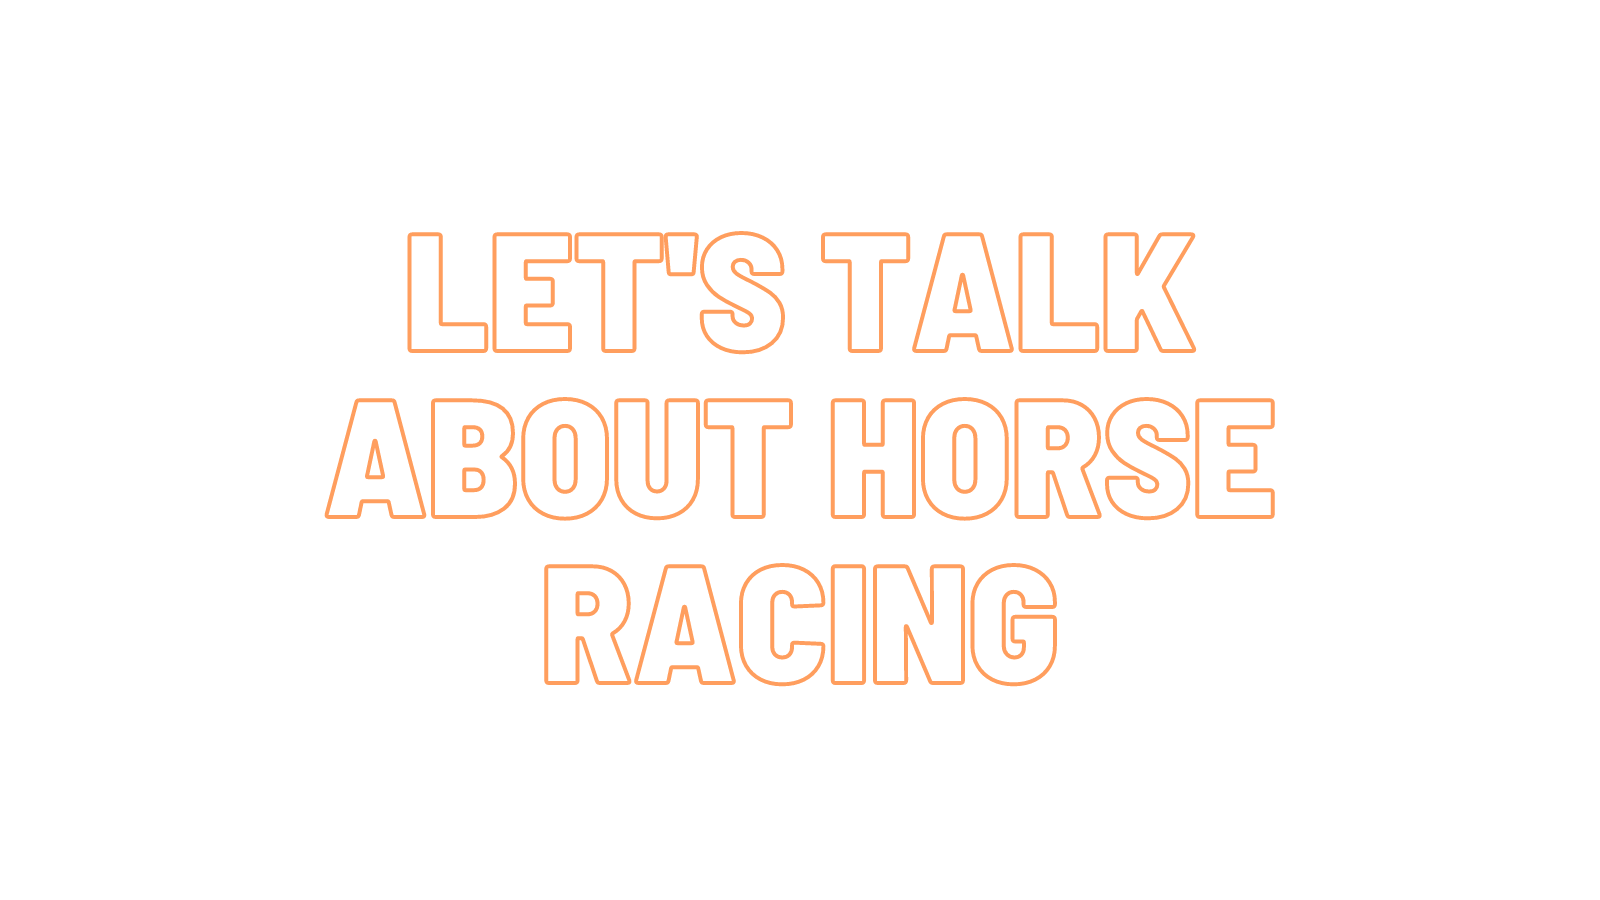 Let's talk horse racing